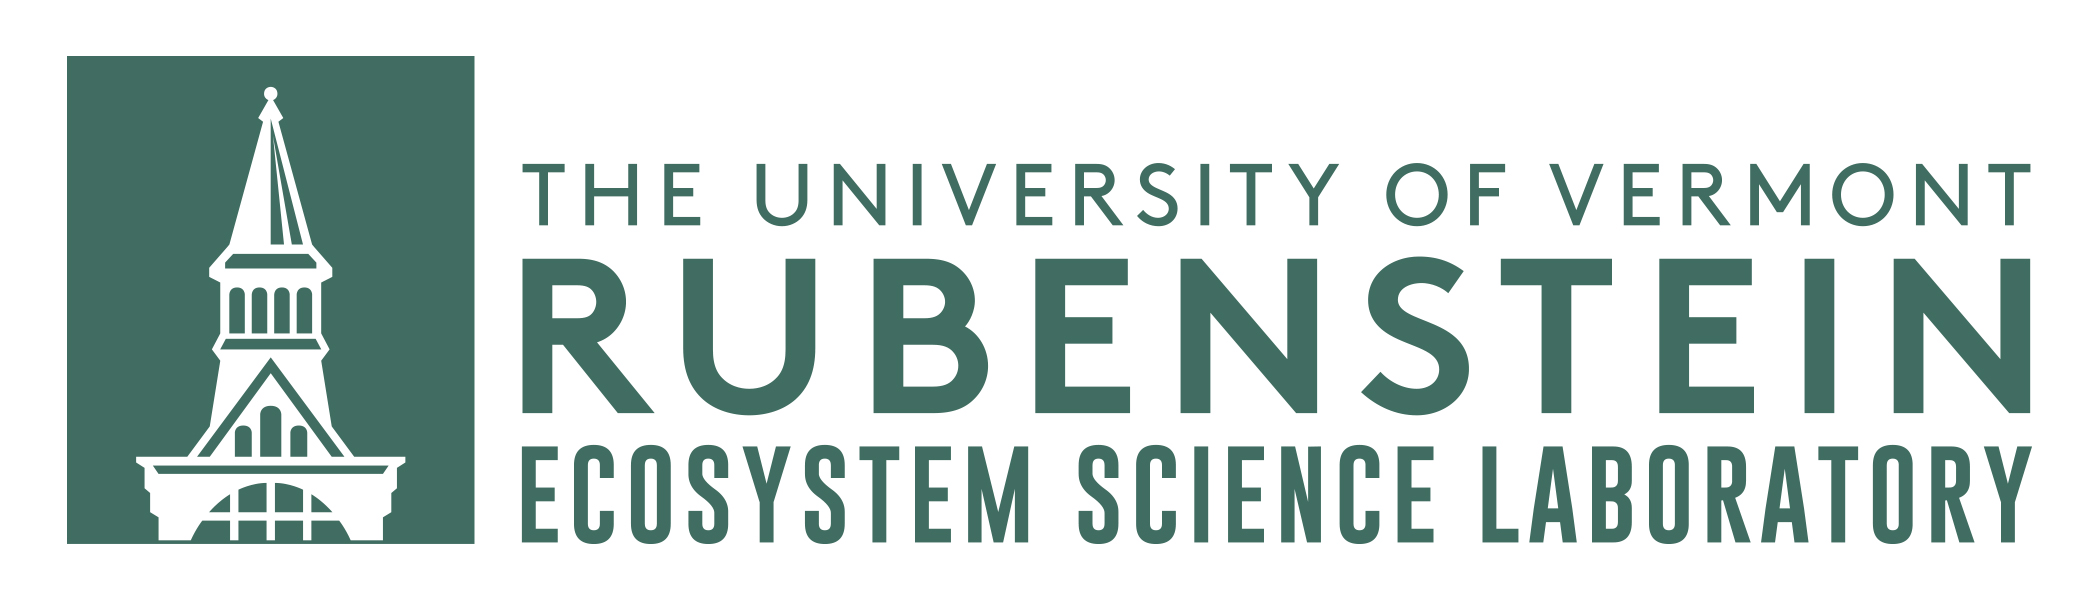 Rubenstein Ecosystem Science Laboratory logo